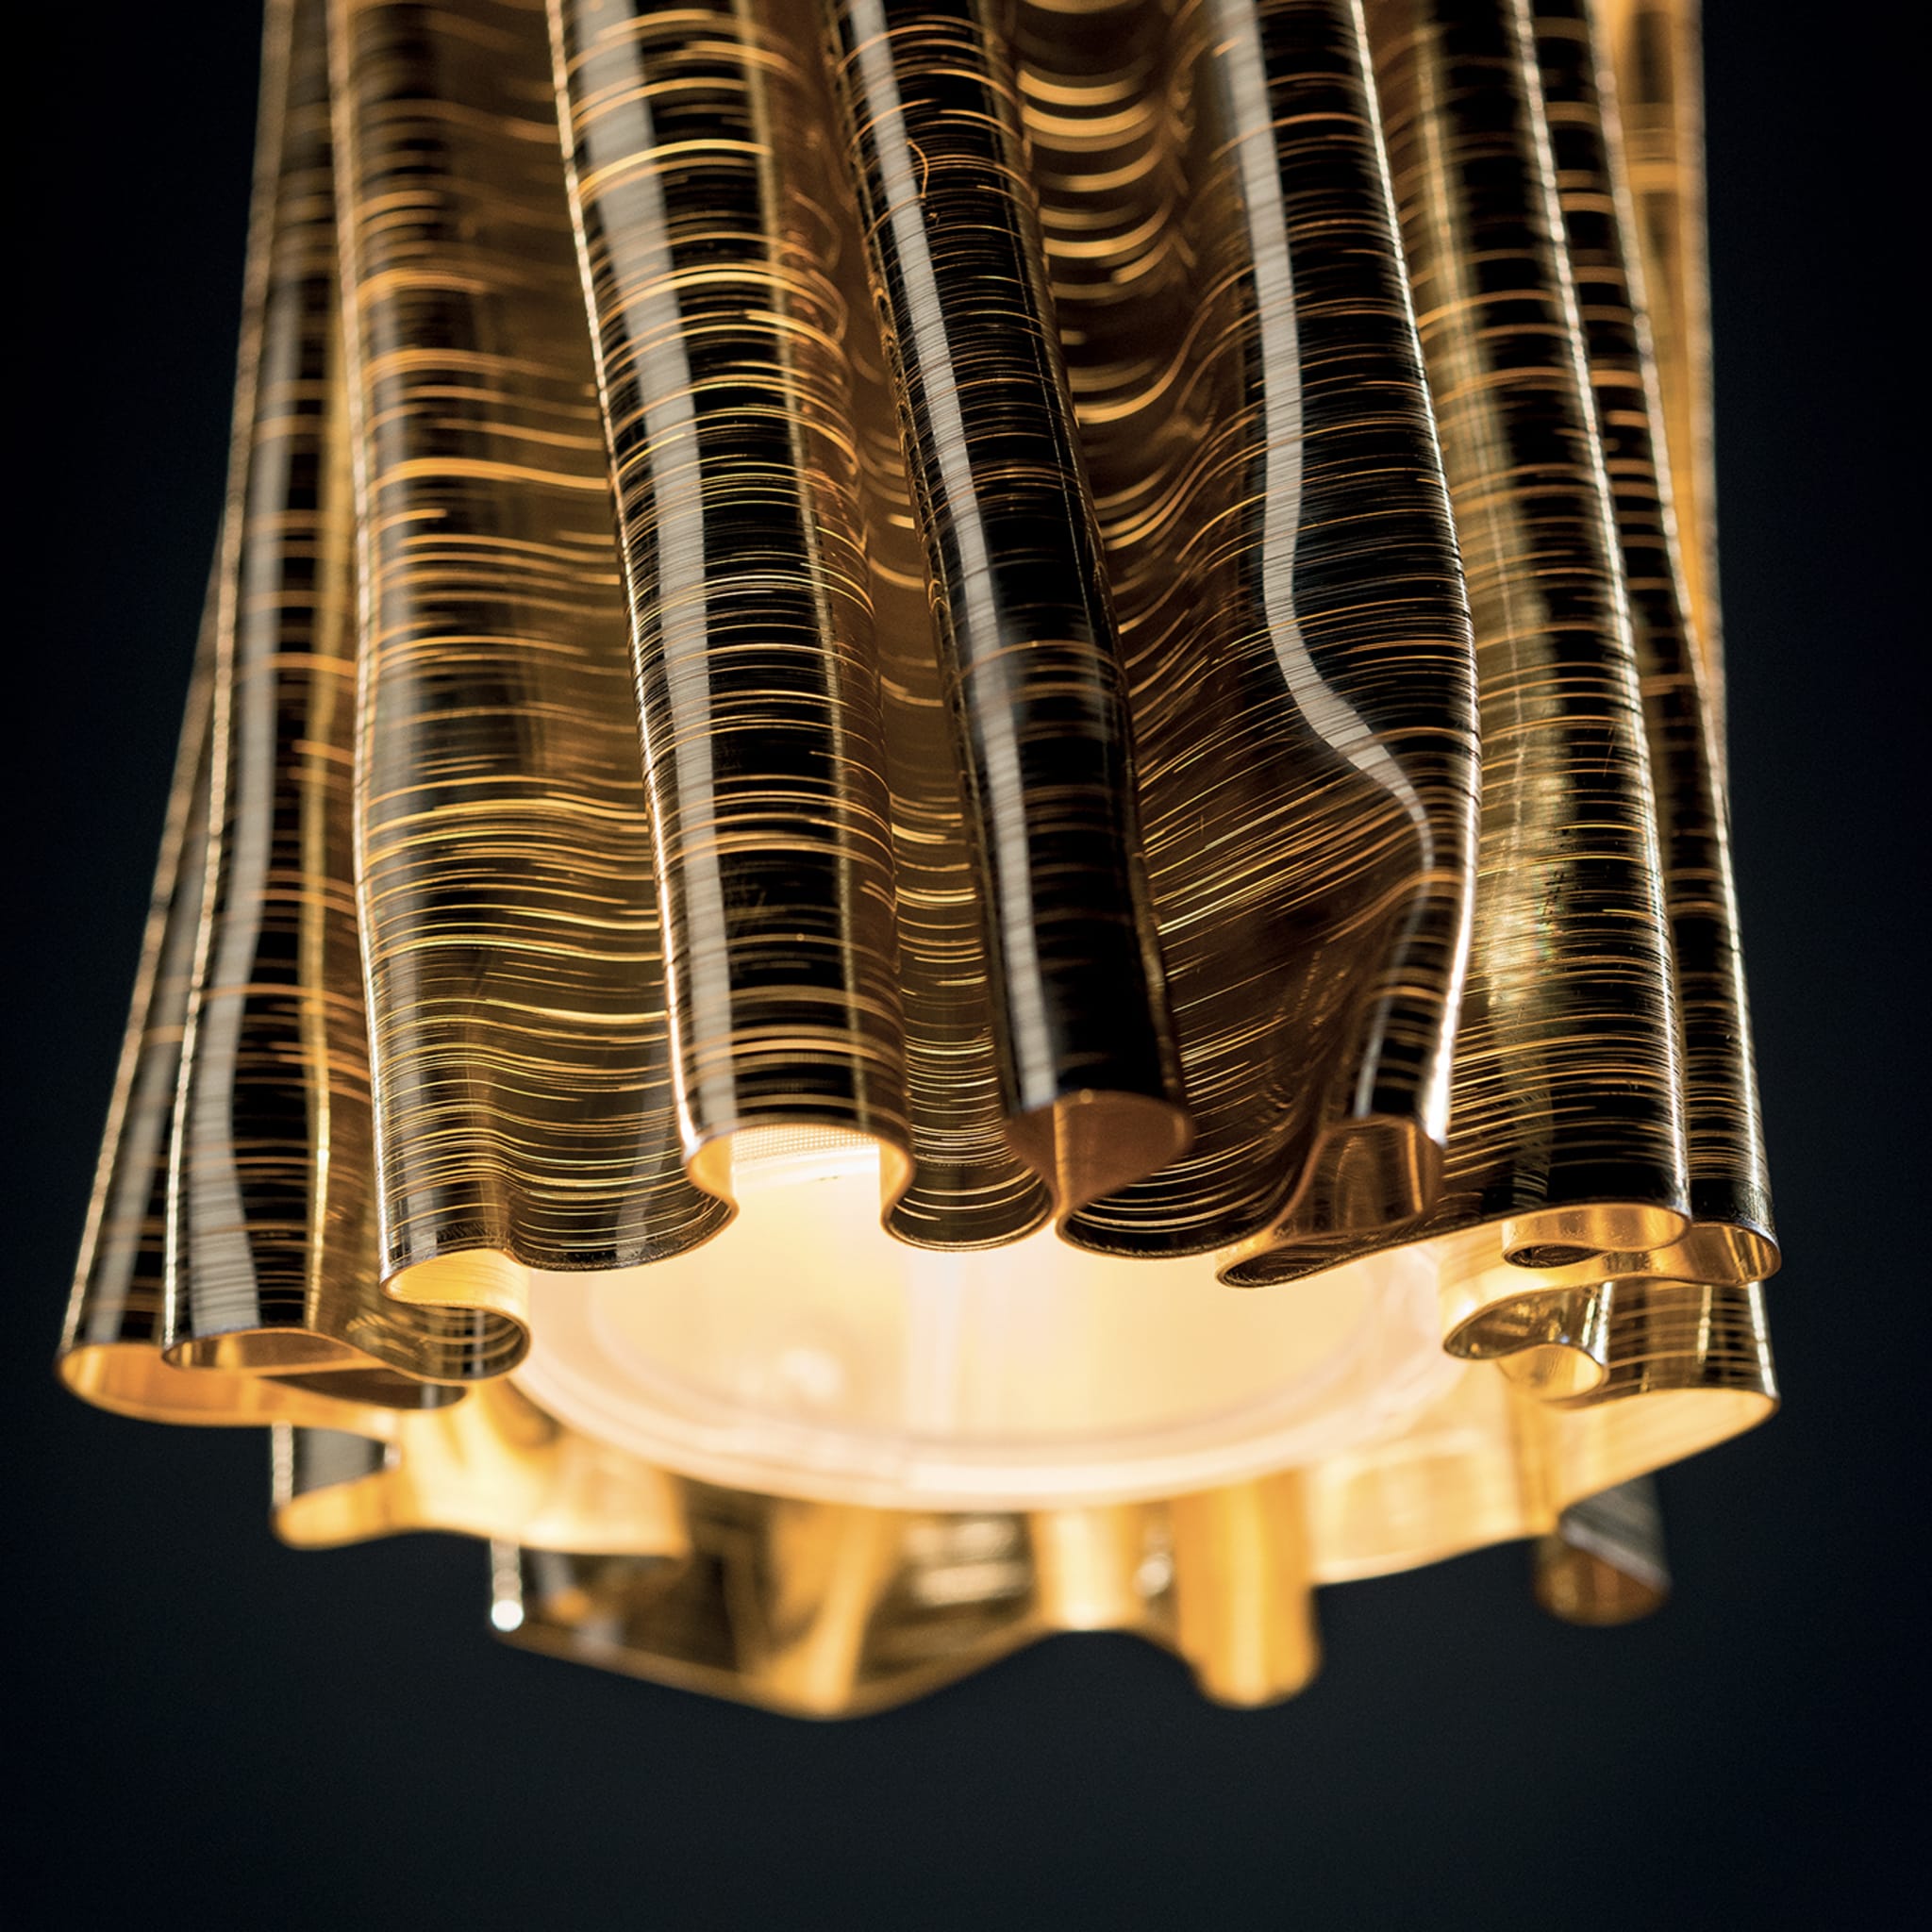 Accordéon Vertical Gold Pendant Lamp by Marc Sadler - Alternative view 1